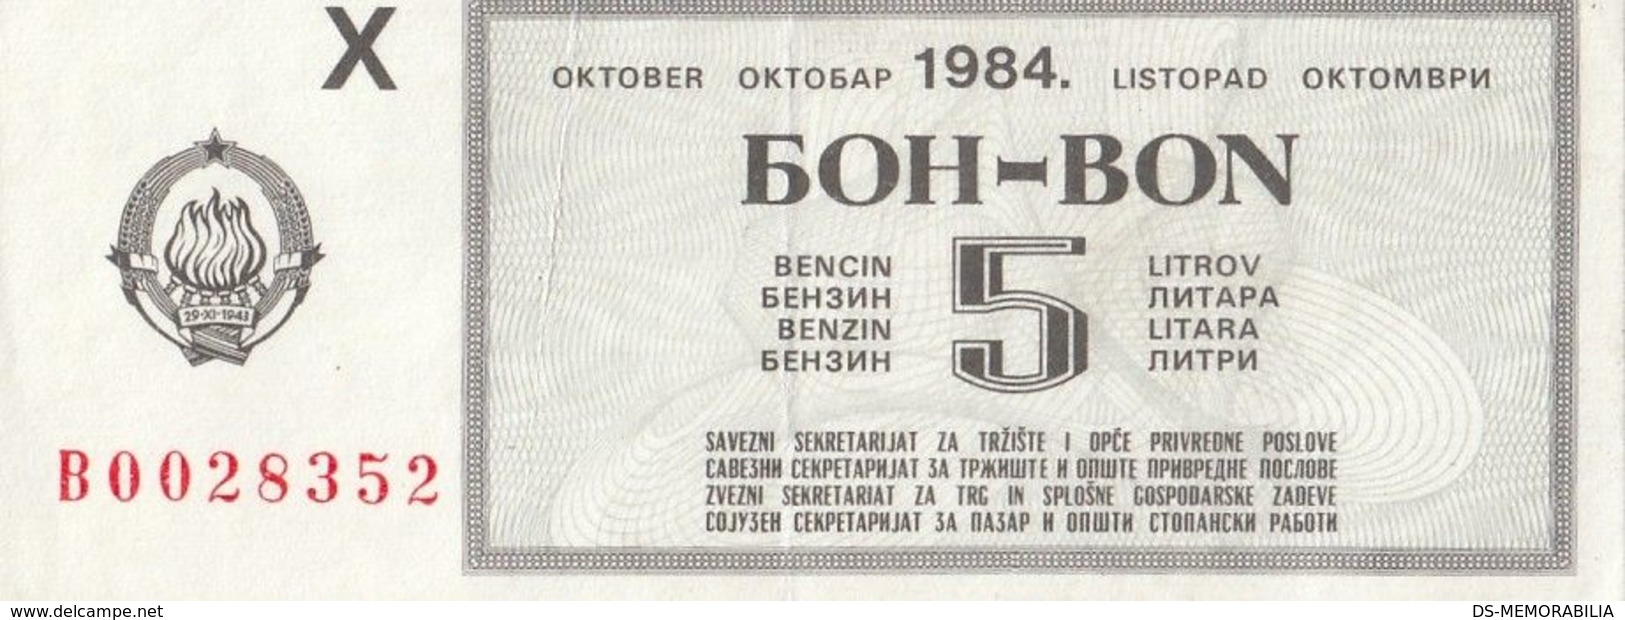 Yugoslavia 5 Litar Gasoline Money Bon Paper Voucher October 1984 - Yugoslavia